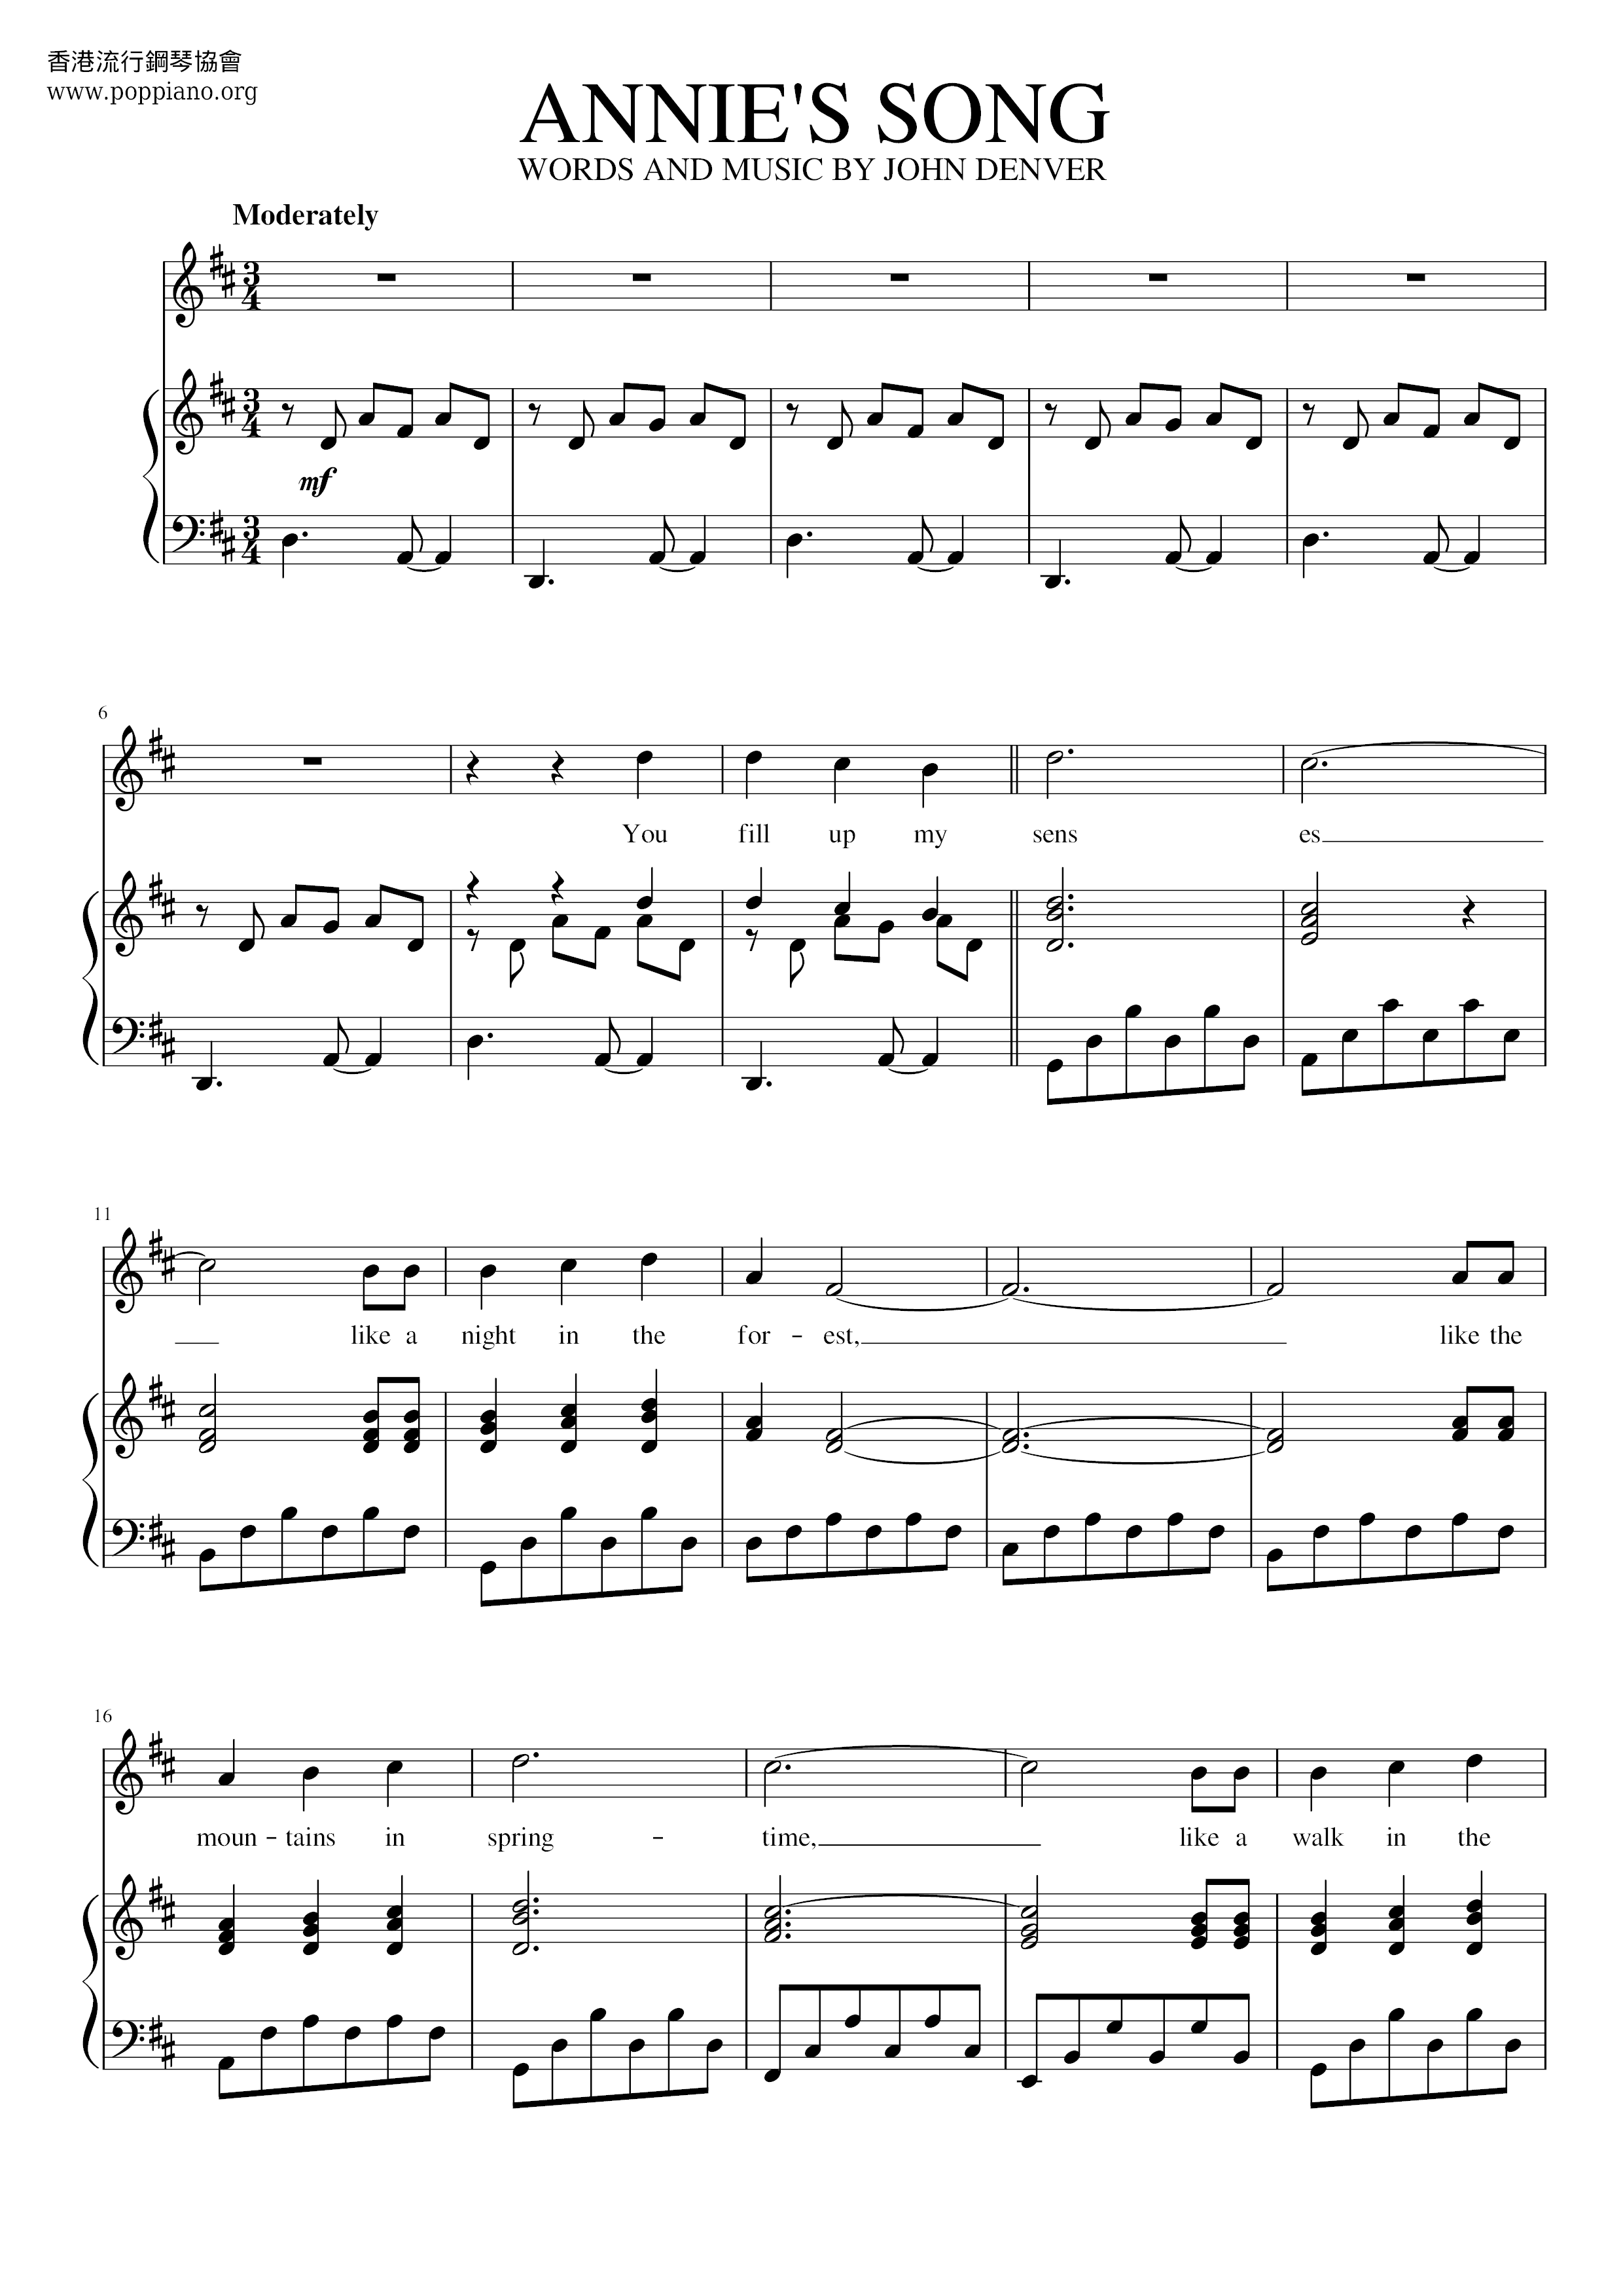 ☆ John Denver-Annie's Song Sheet Music pdf, - Free Score Download ☆